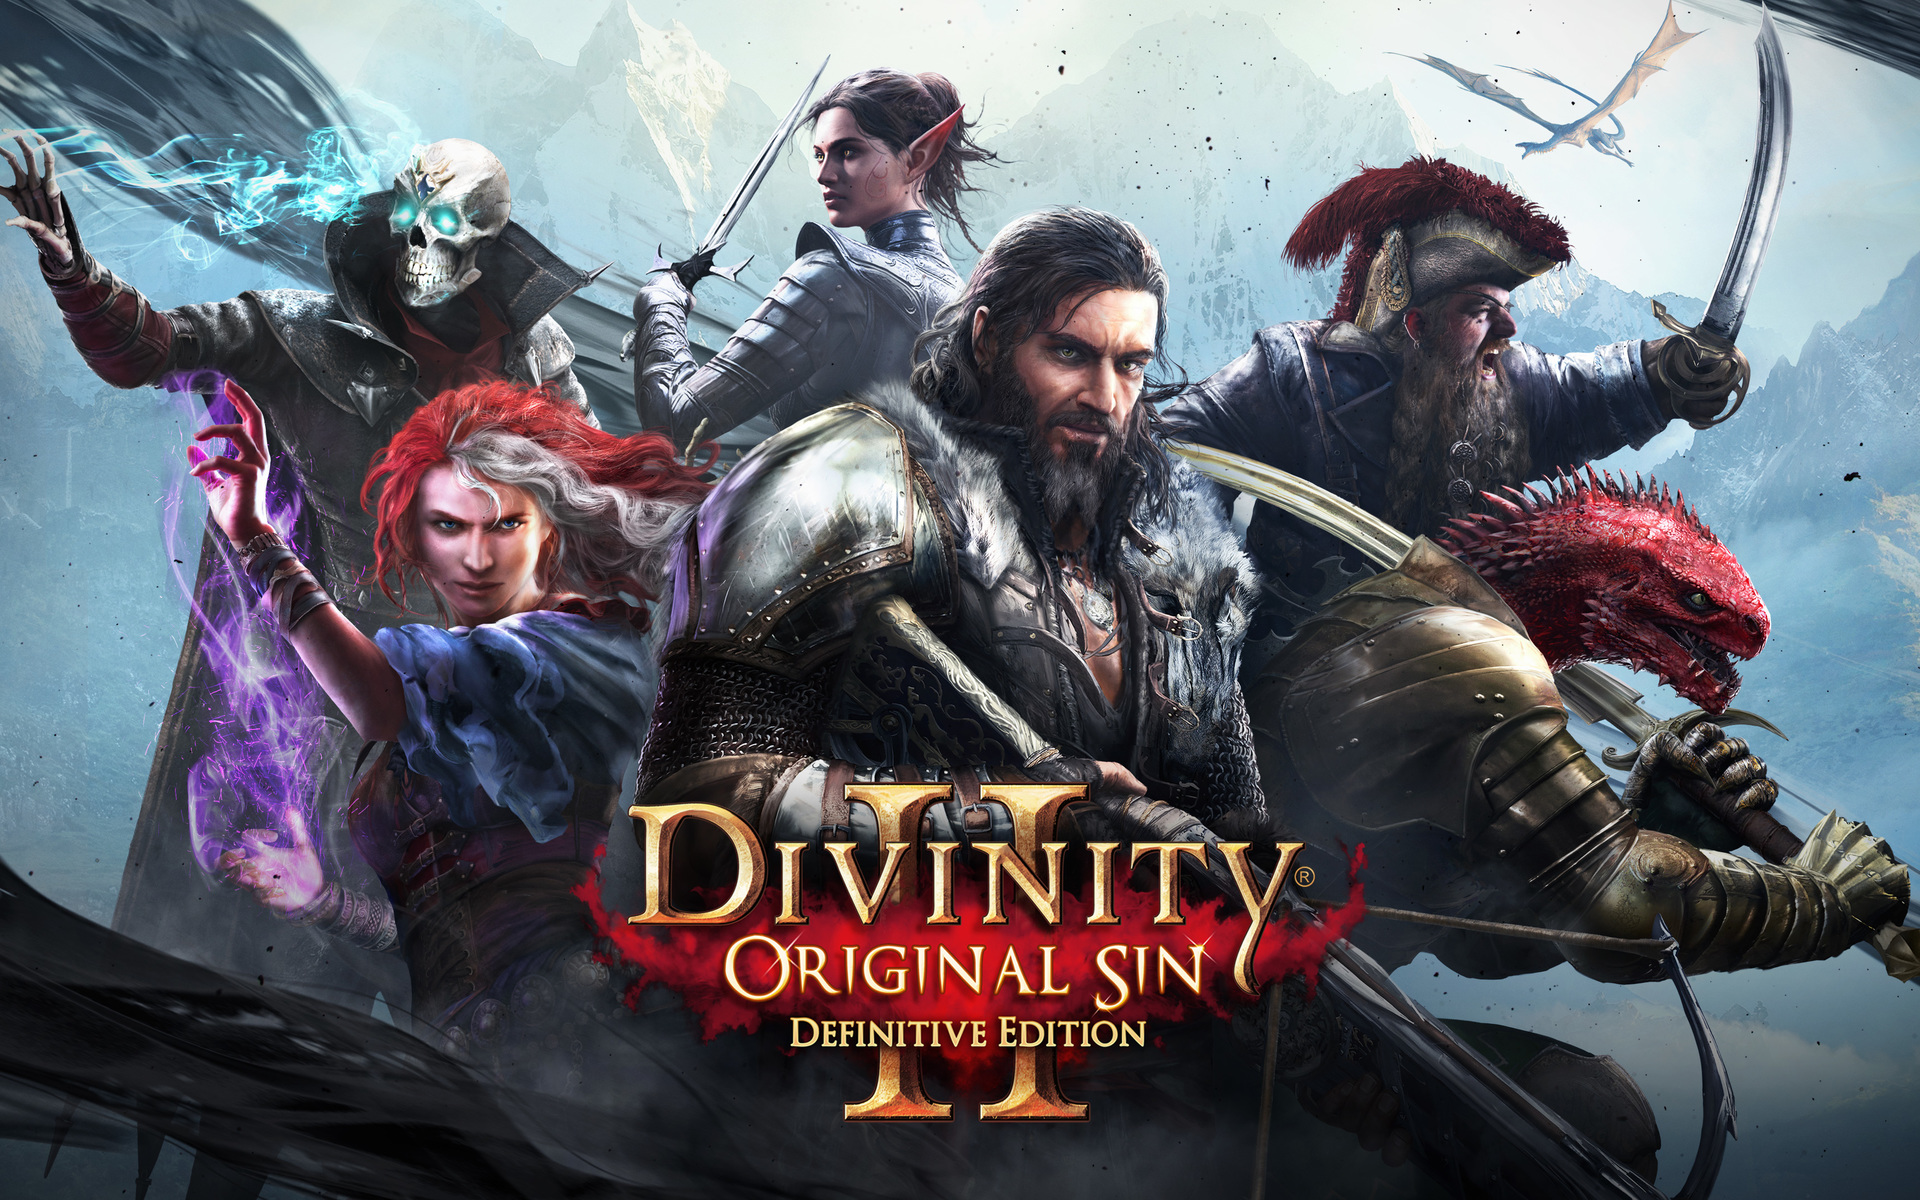 download divinity original sin 2 soundtrack for free